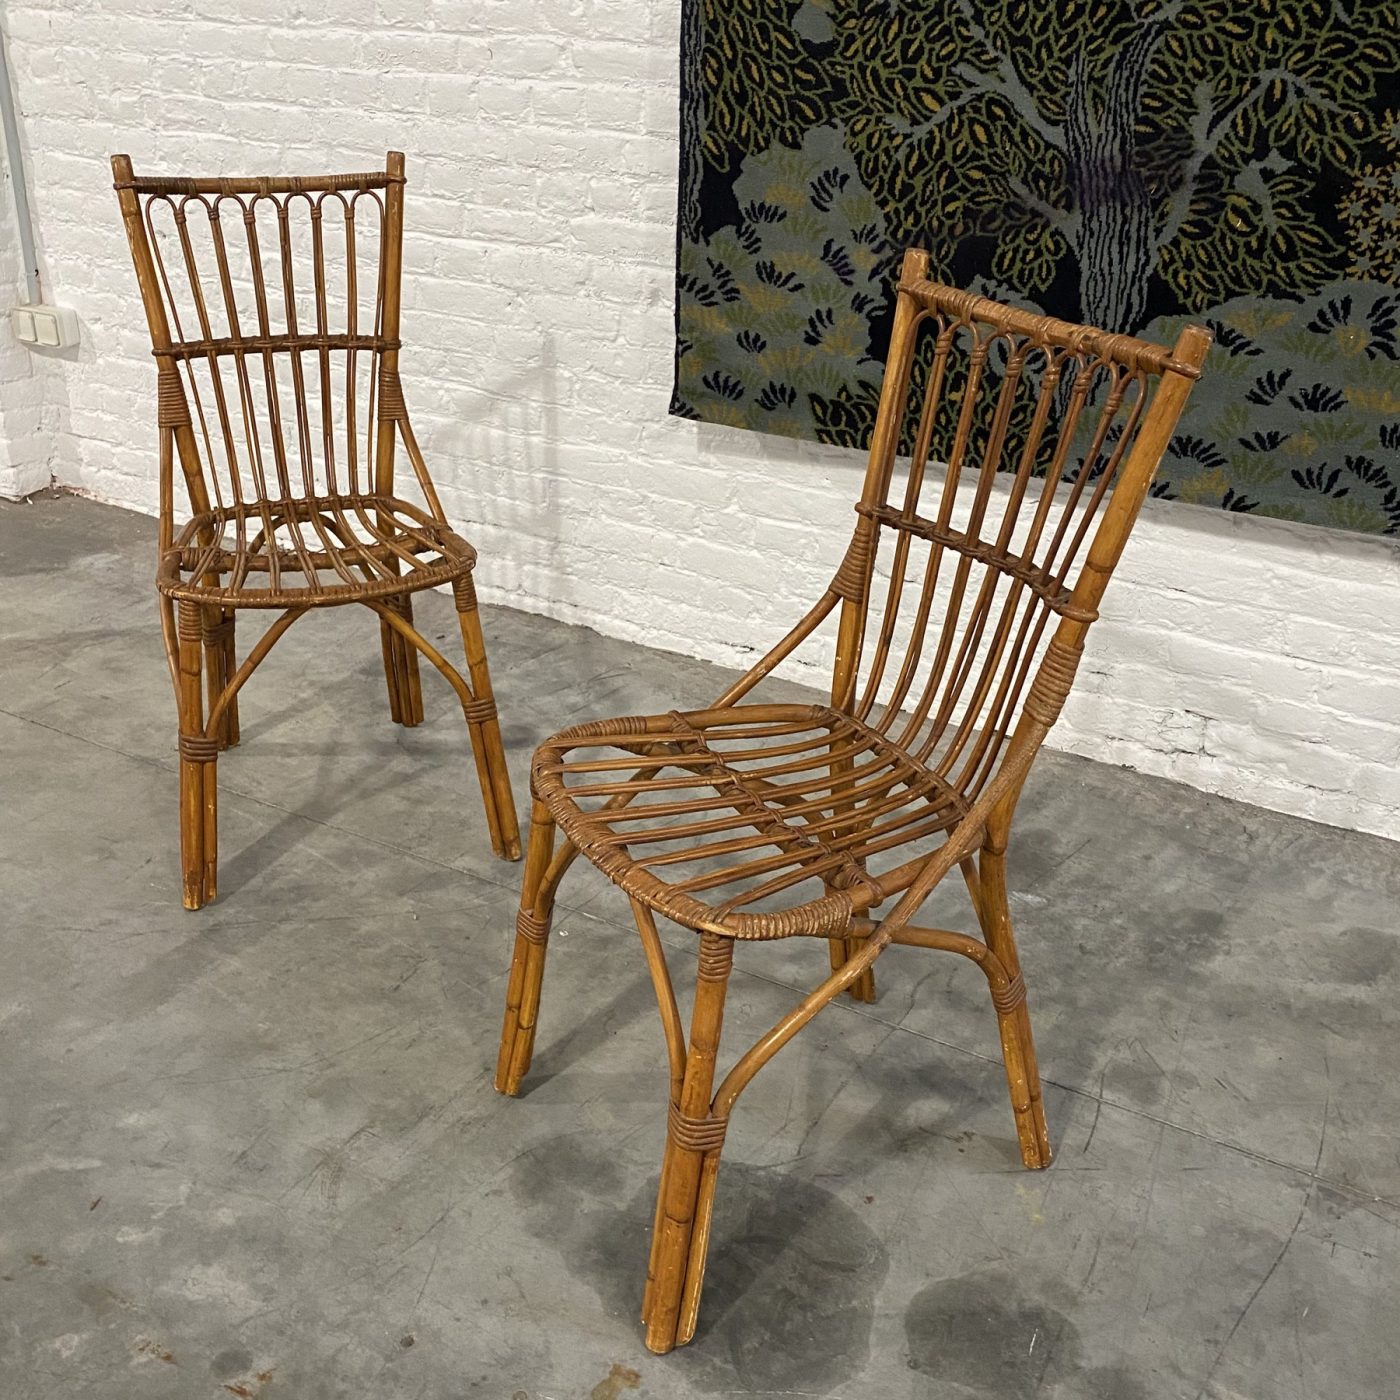 objet-vagabond-rattan-chairs0000